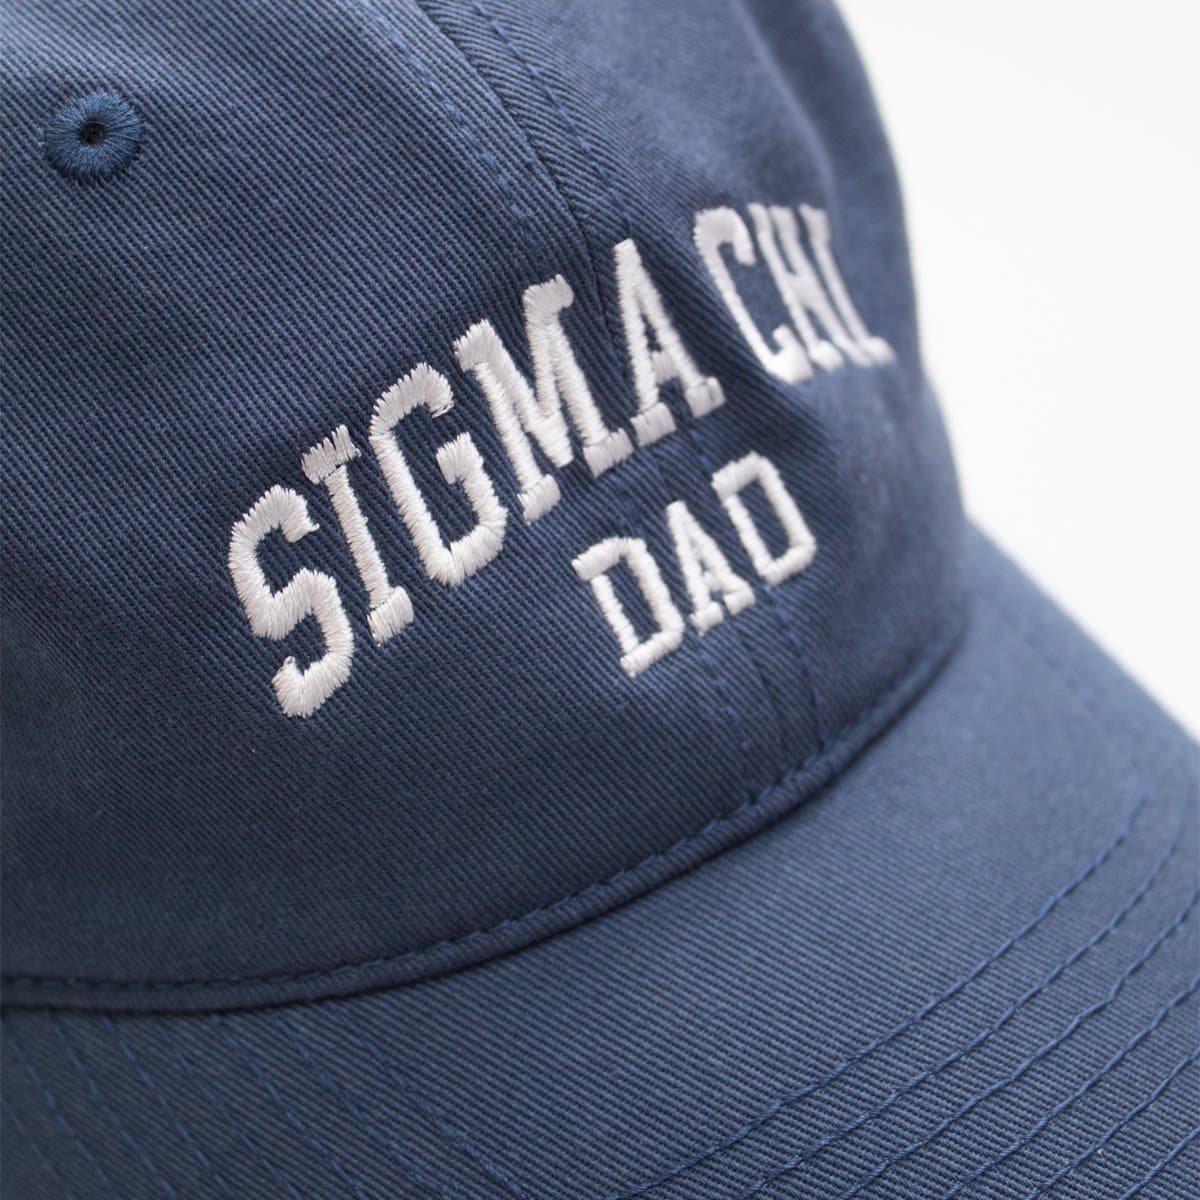 Chi Omega Dad Cap | Chi Omega | Headwear > Billed hats